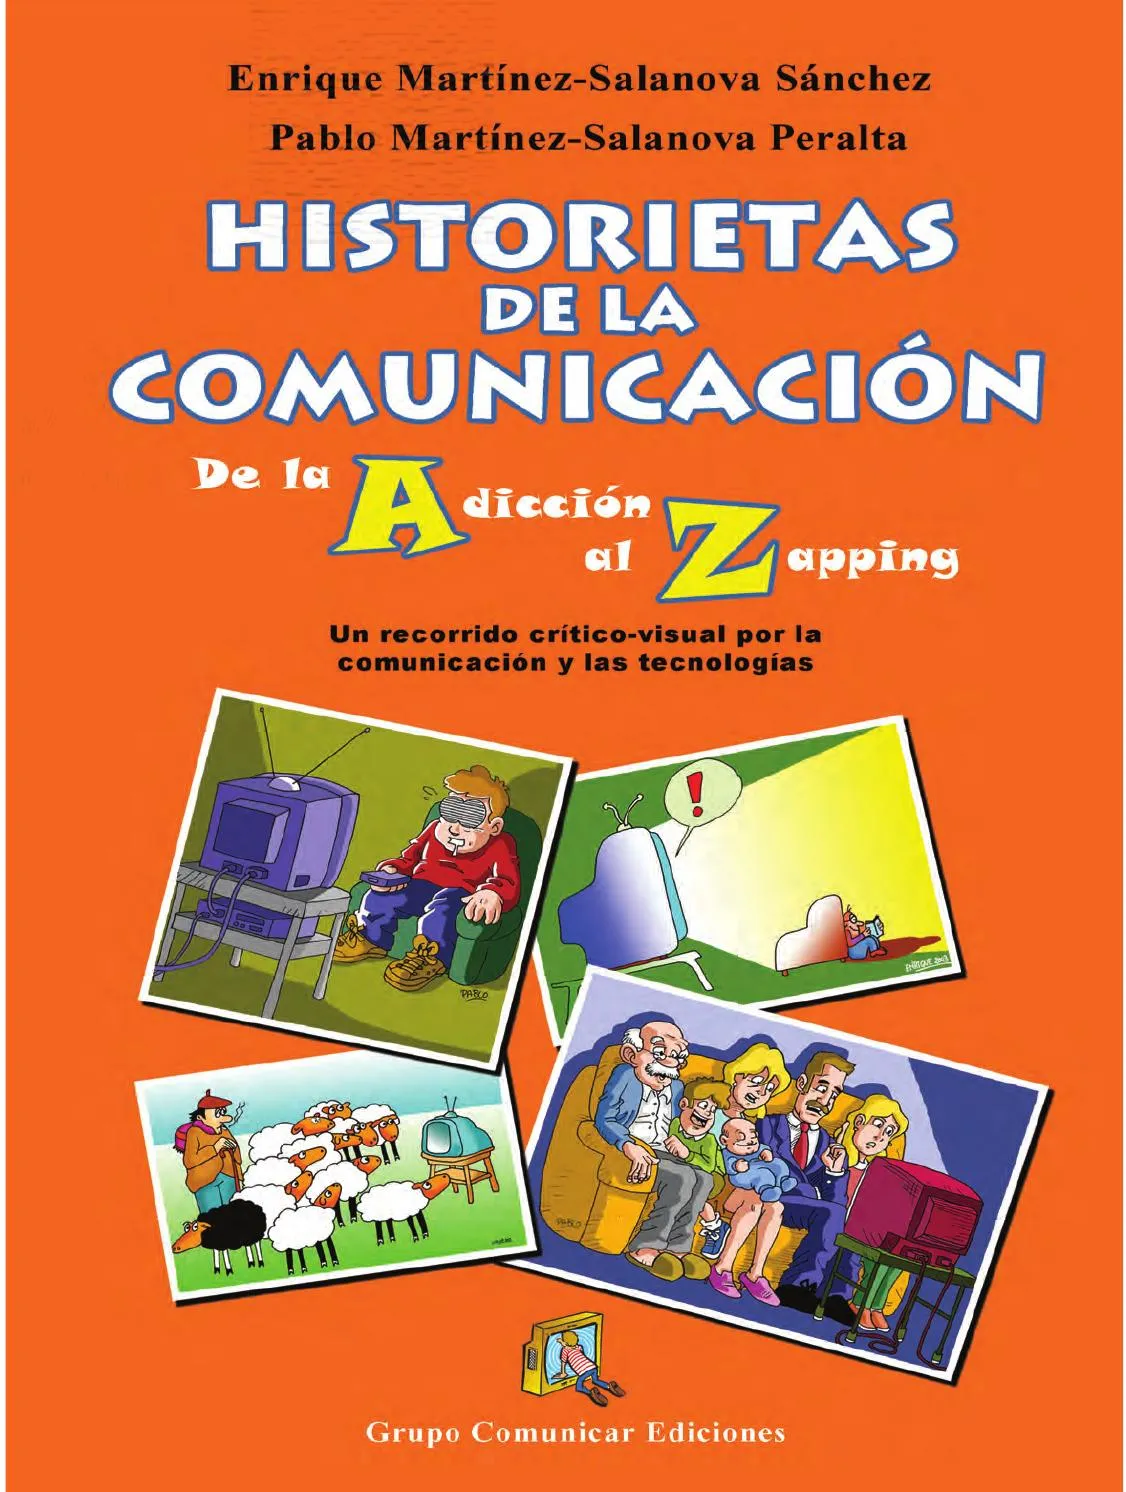 Historietas de la comunicacion by Aularia - Issuu